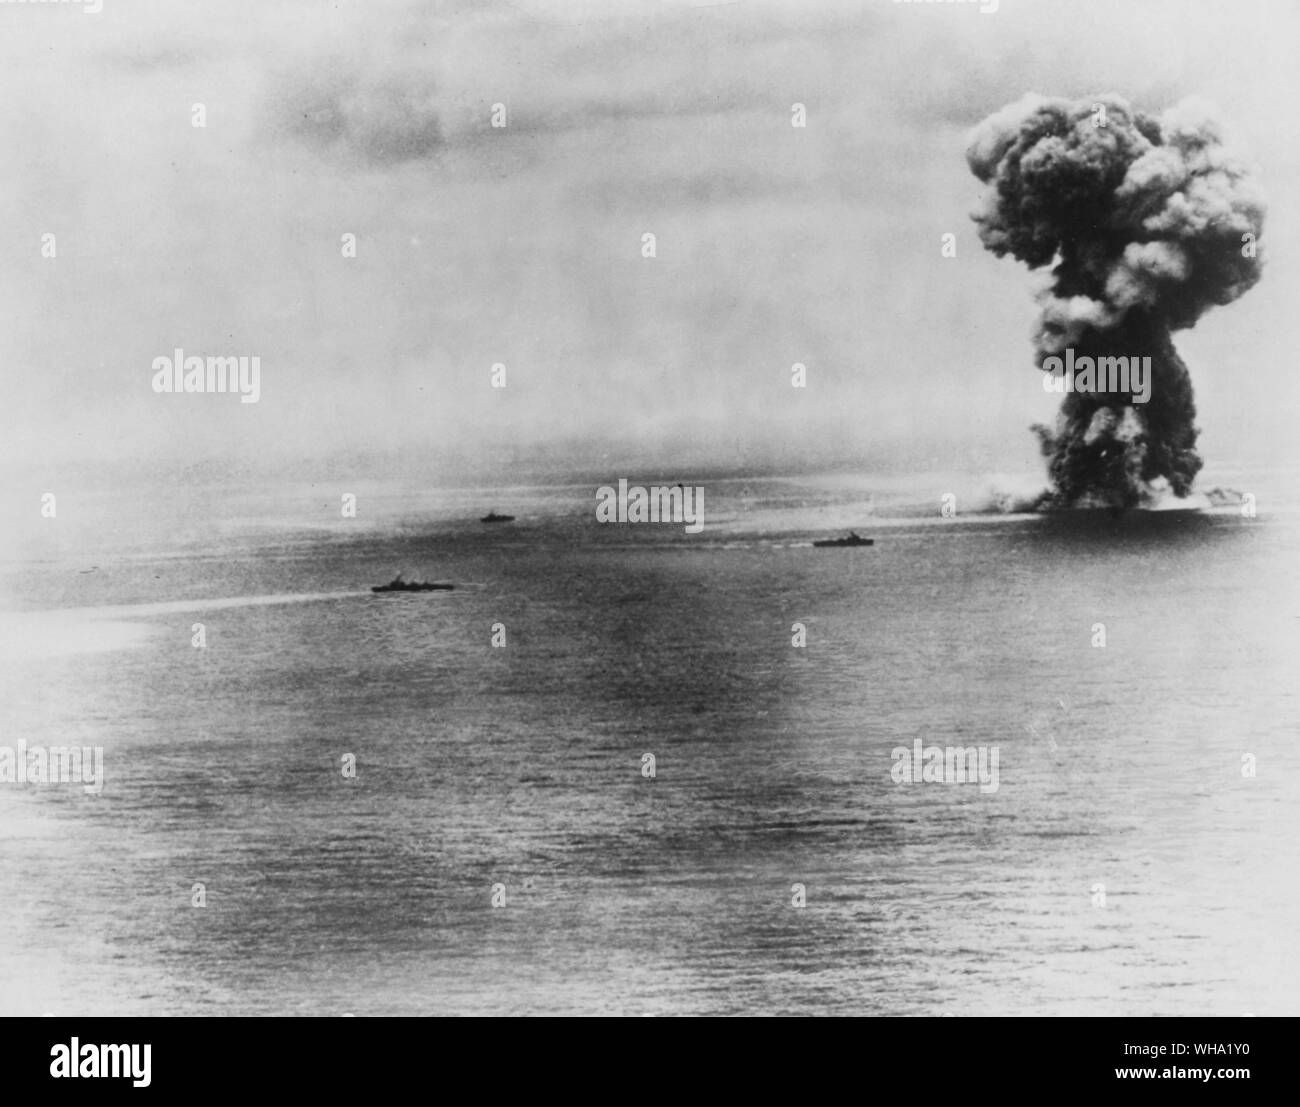 WW2: Battleship Yamato sunk by navy planes, East China sea. April 1945. Stock Photo